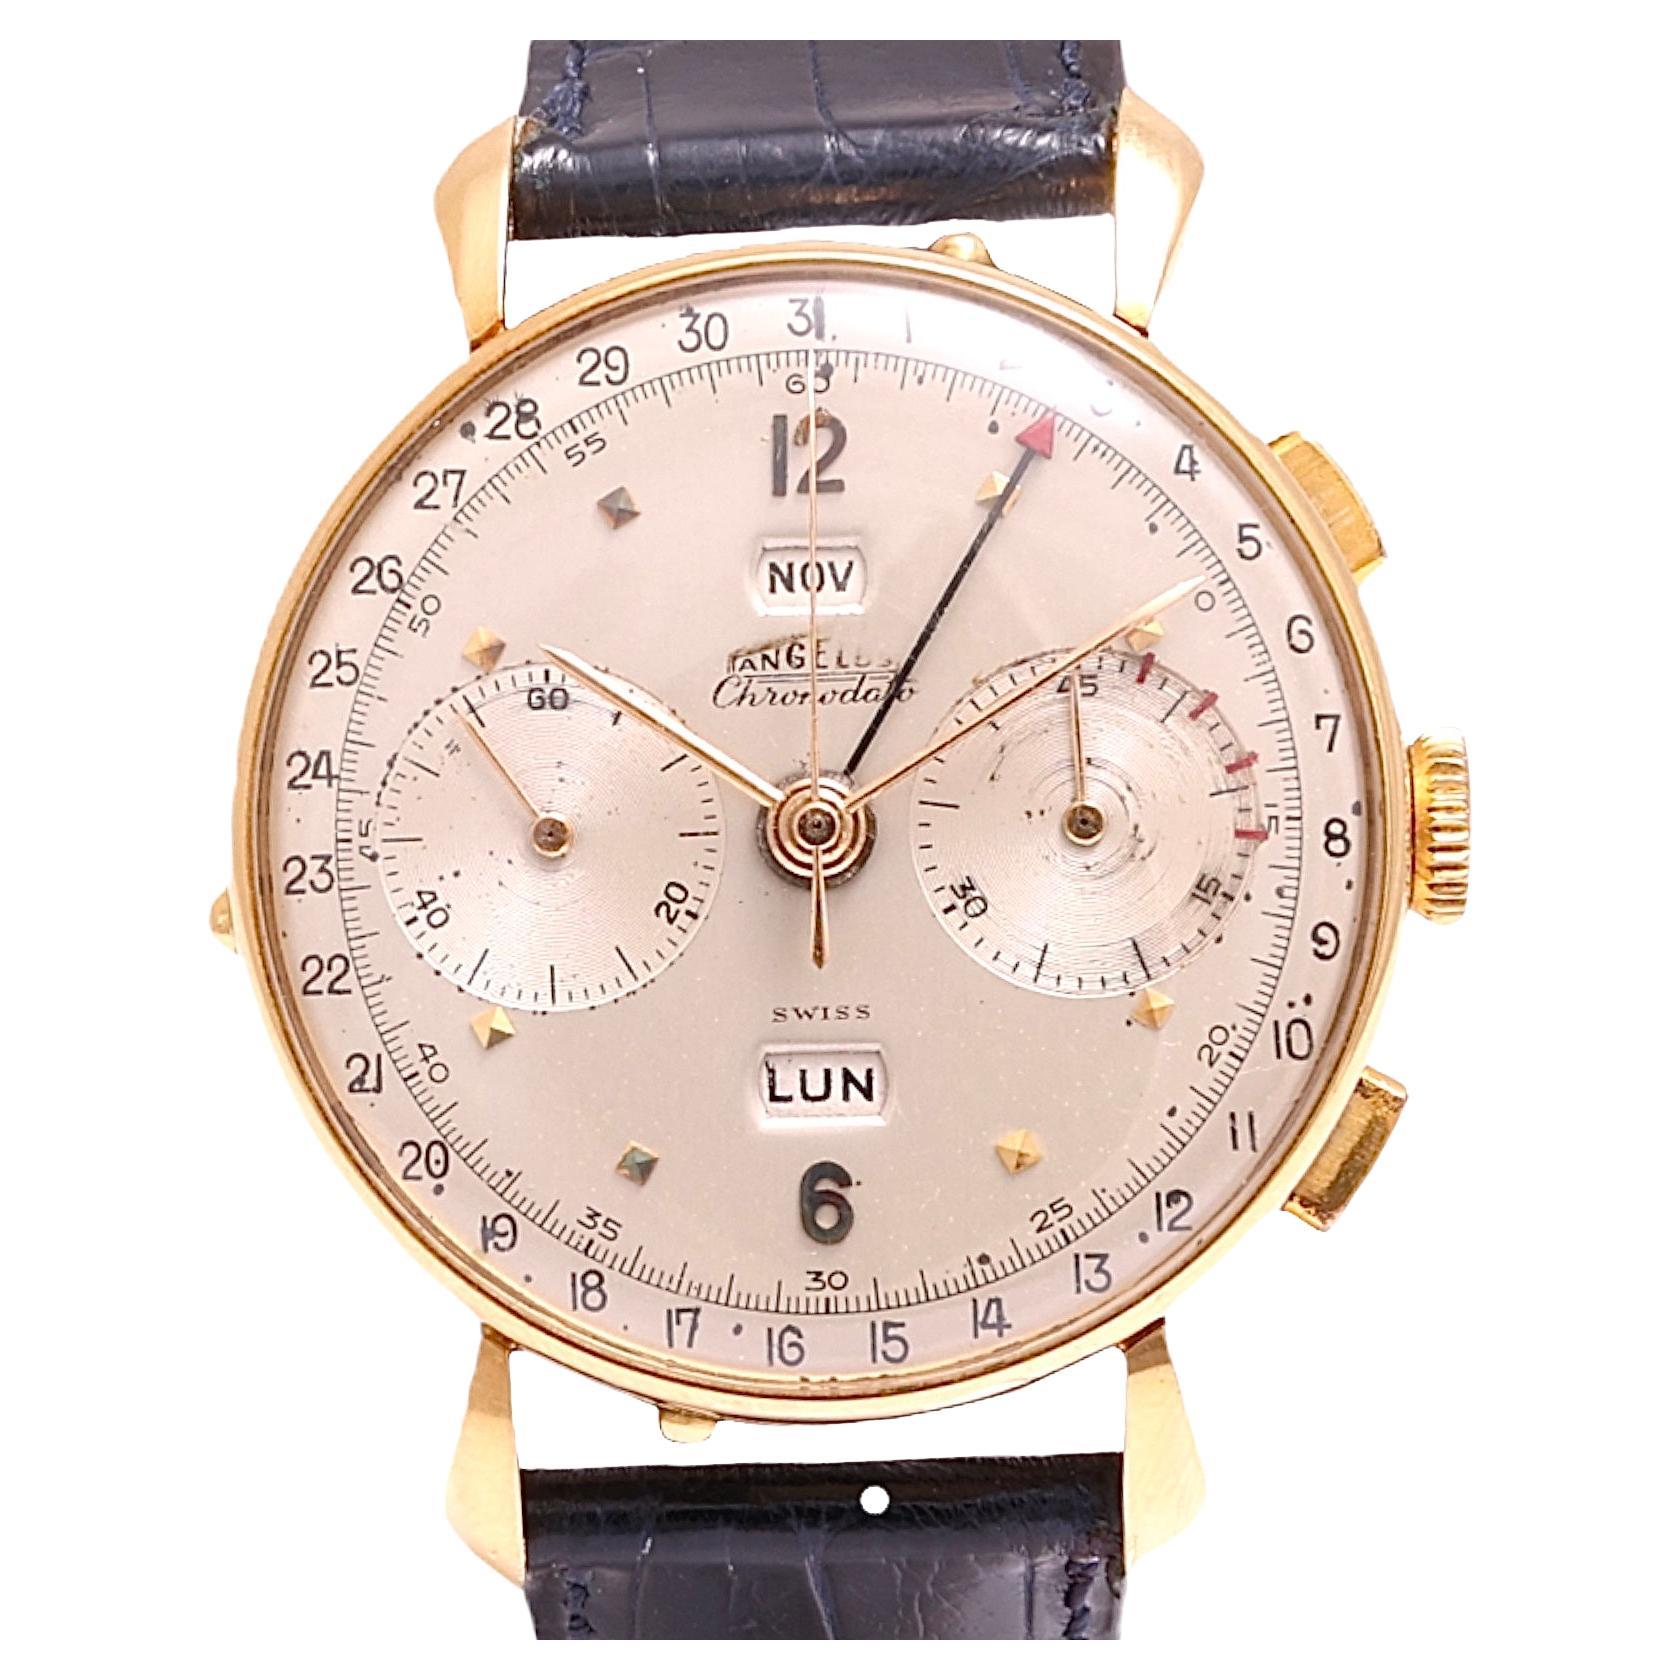 18 Kt Gold Angelus Chronodate Triple Date Jumbo 38mm Chronograph Wrist Watch For Sale